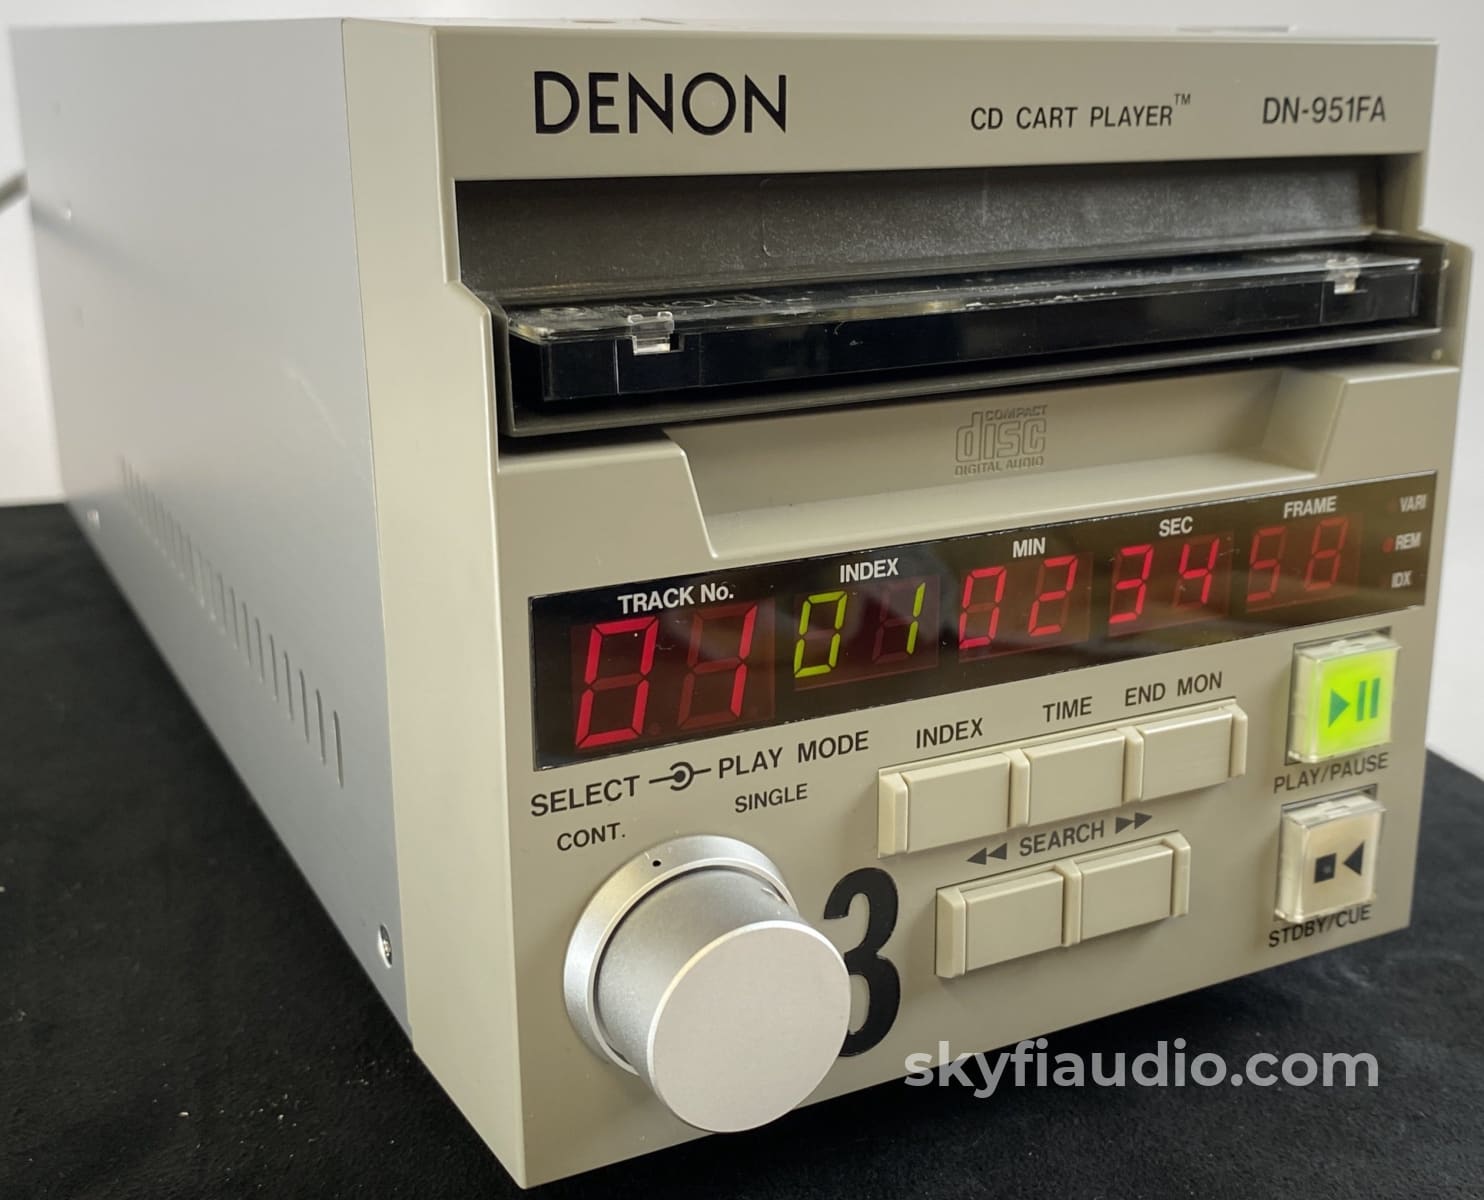 Denon Dn-951Fa Professional Broadcast Quality Cd Player - New In Box! + Digital